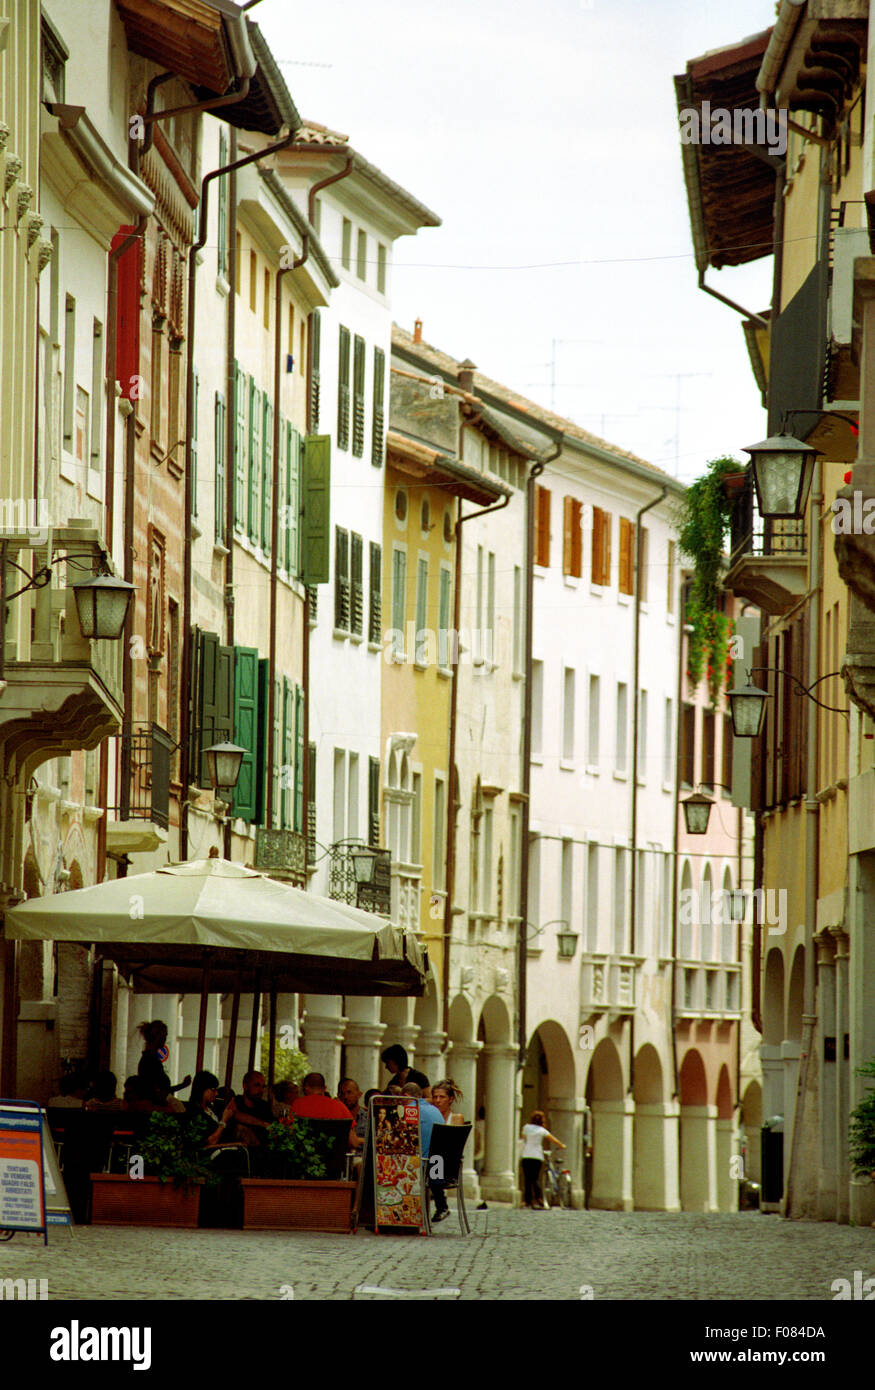 Italy, Friuli Venezia Giulia, Pordenone. Stock Photo